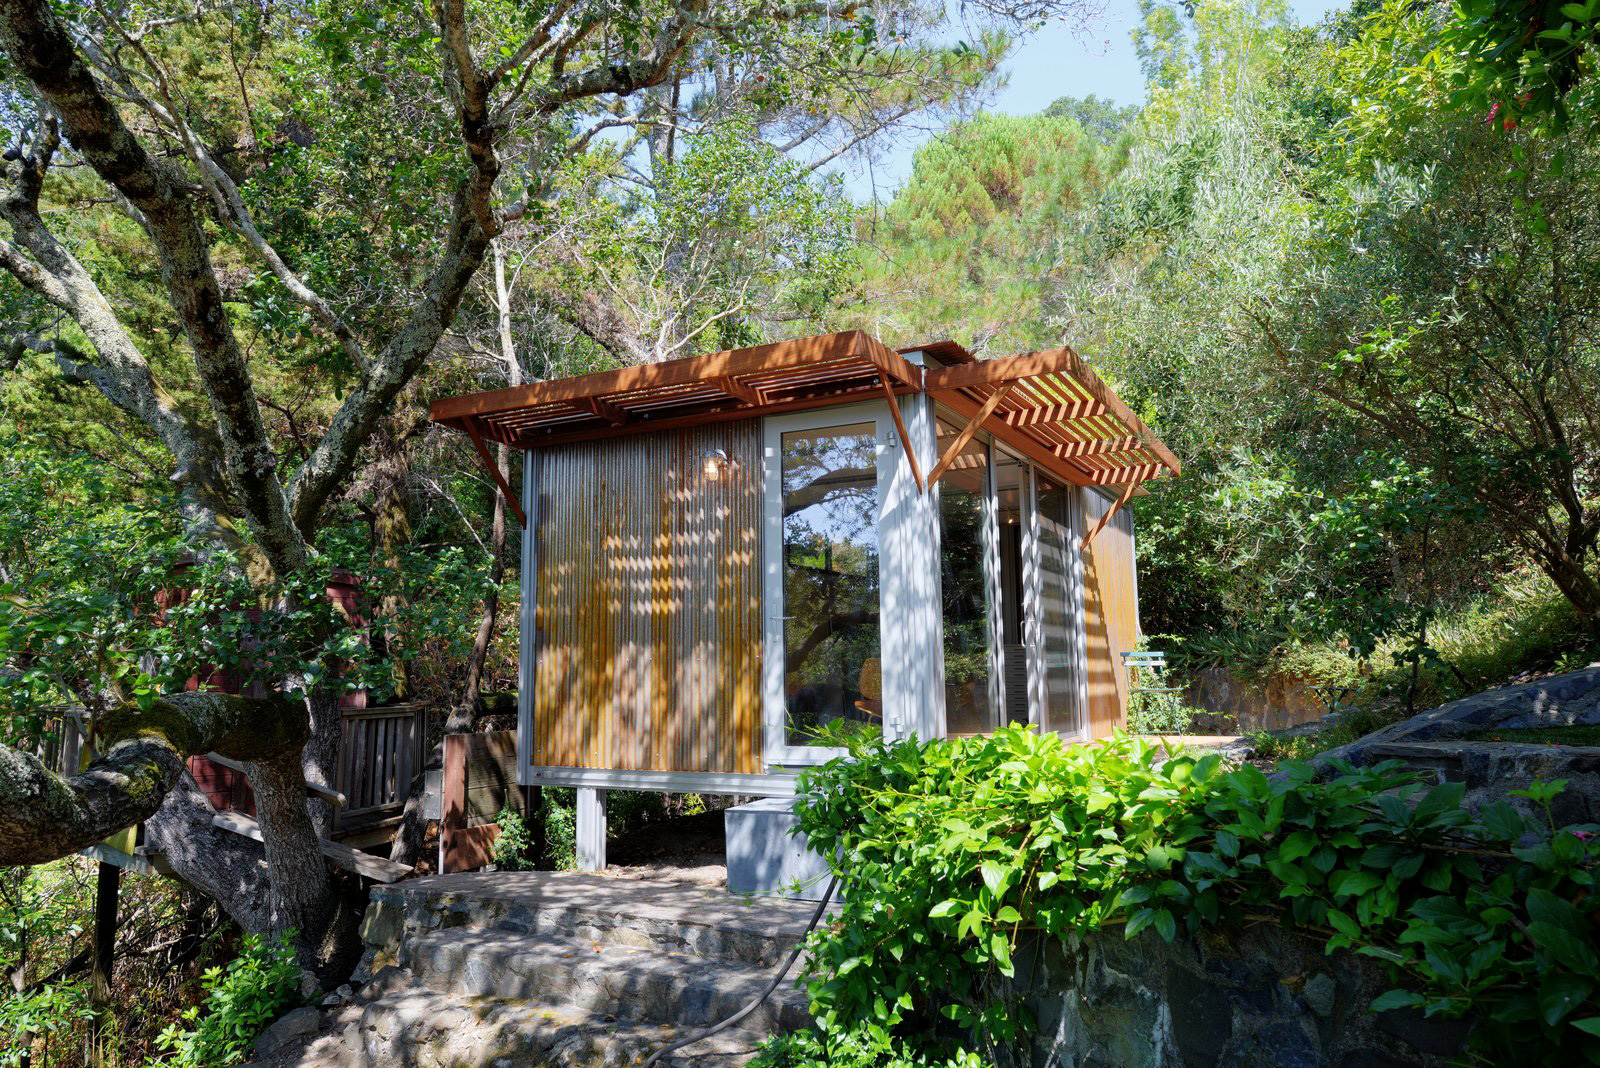 Customisable prefab Kithaus offers a taste of cabin living from $27k